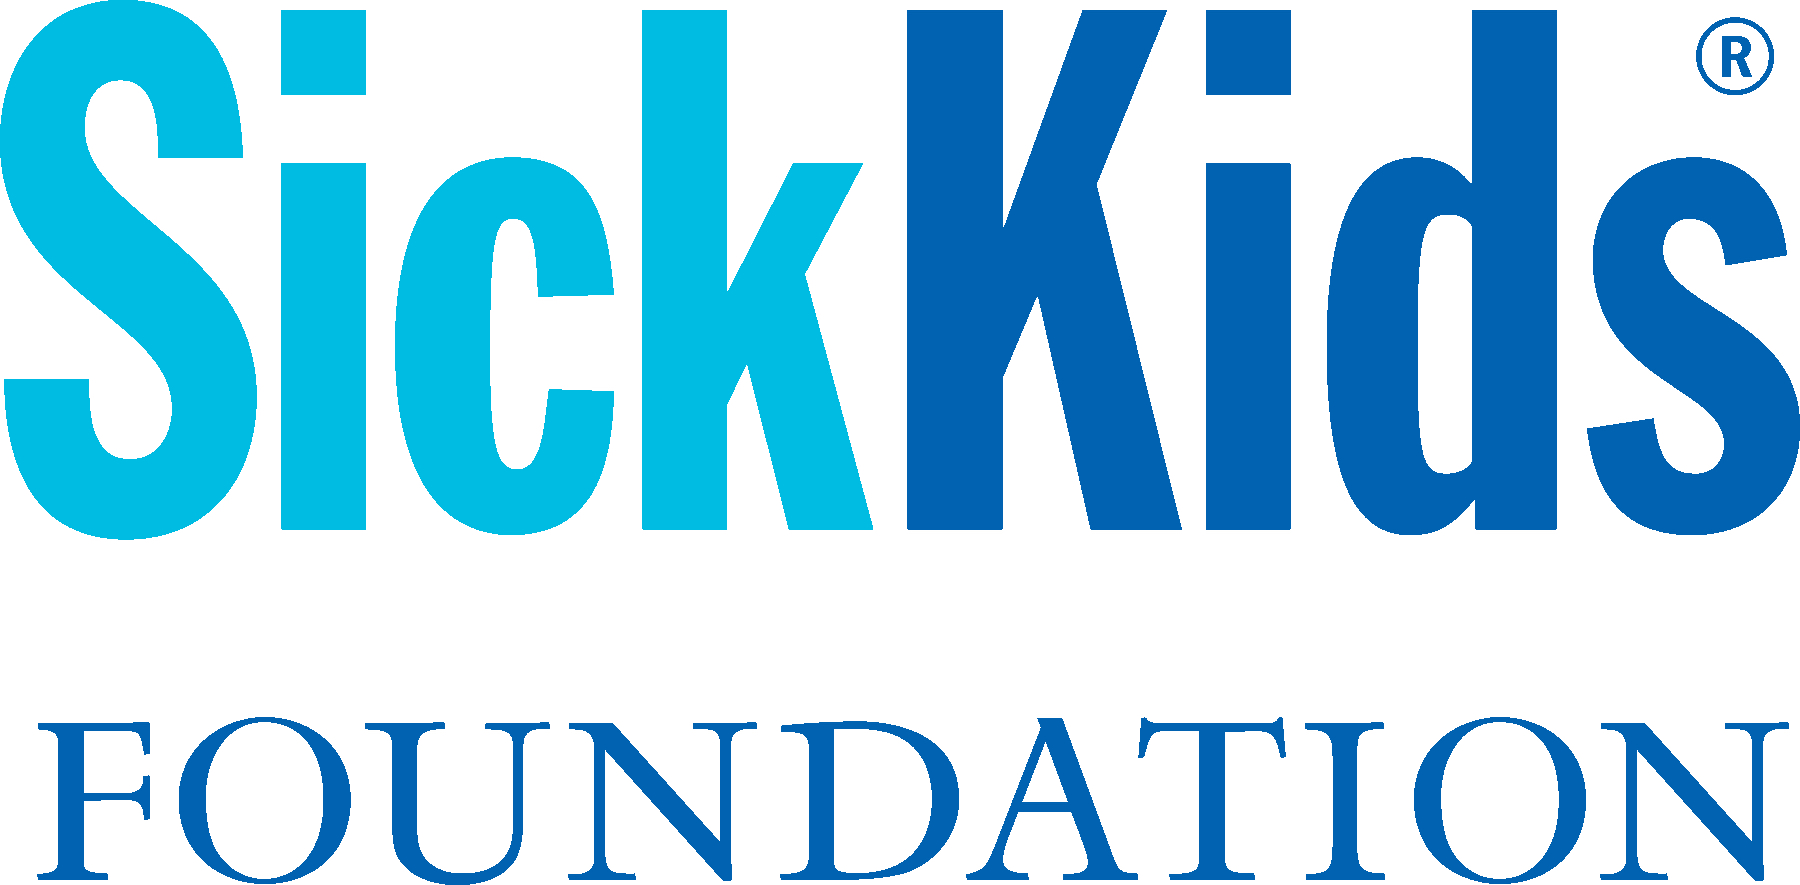 SickKids Foundation logo